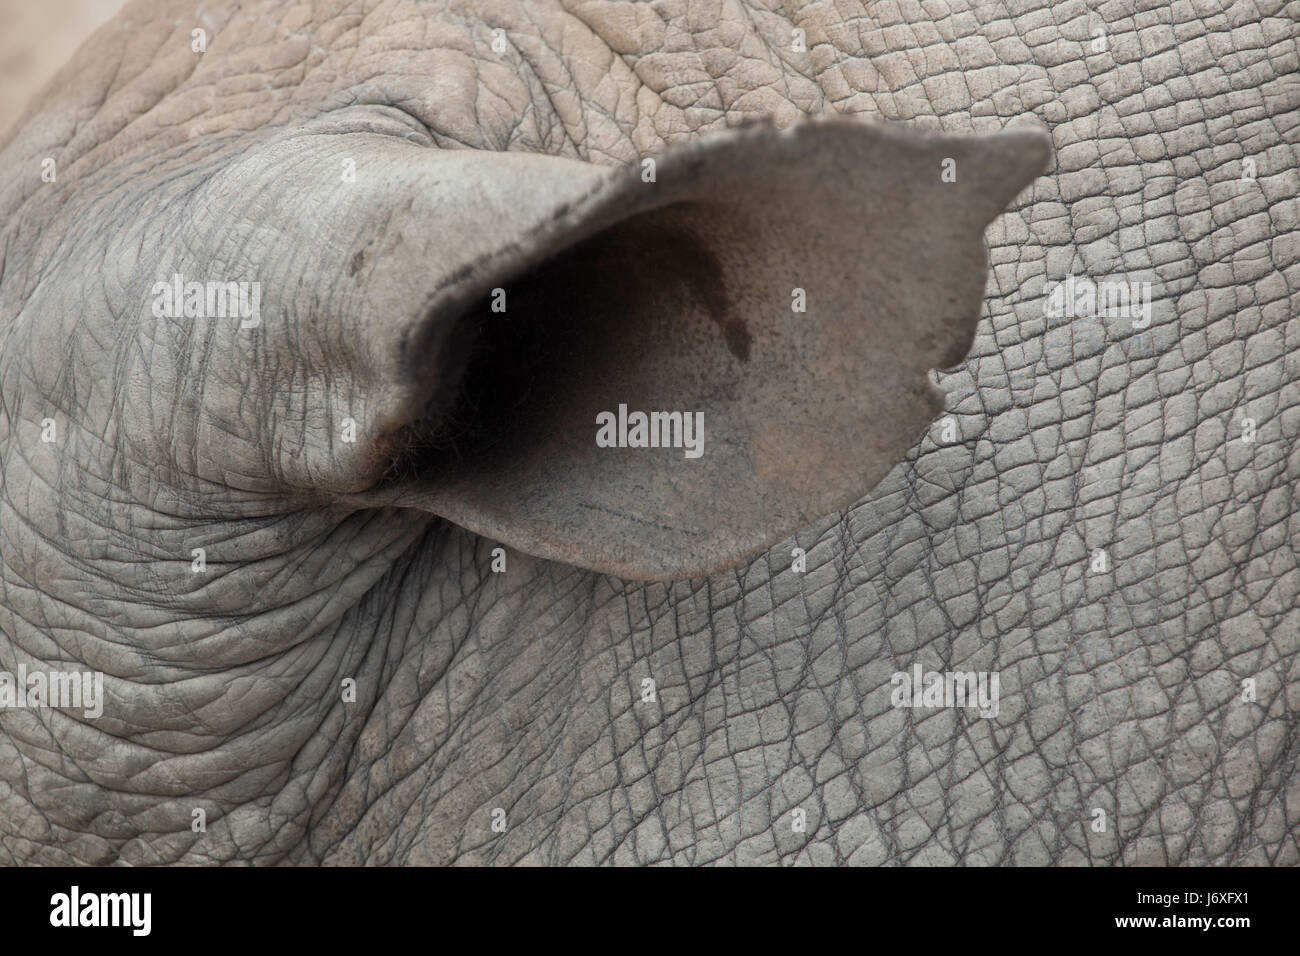 Ear of the Southern white rhinoceros (Ceratotherium simum simum). Stock Photo